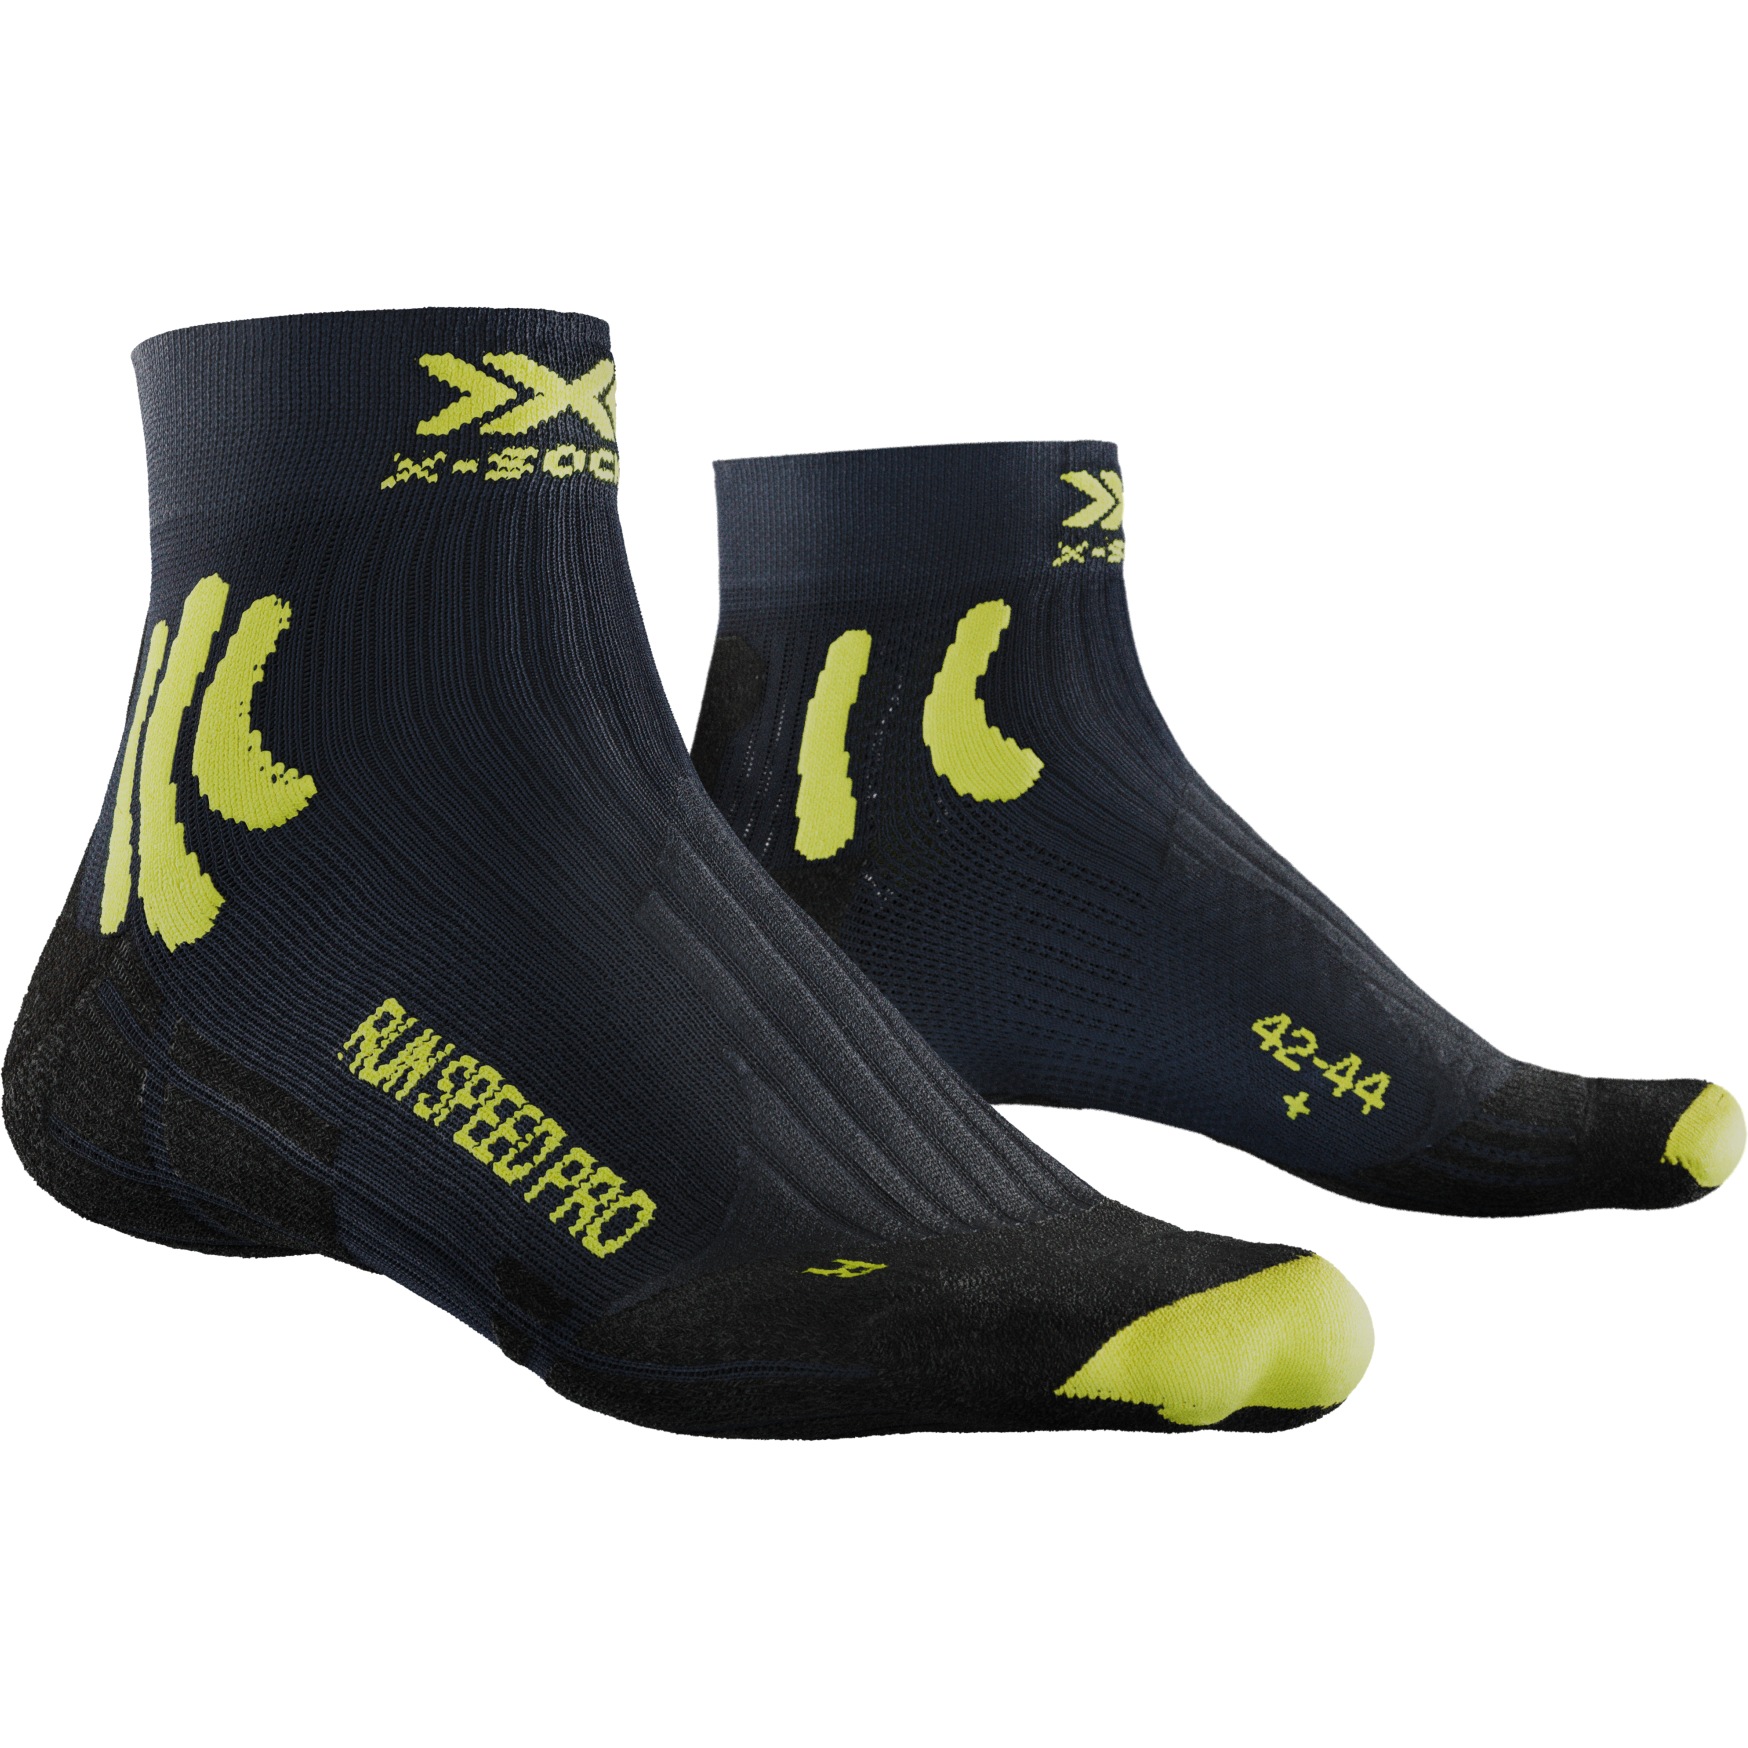 Productfoto van X-Socks Run Speed Pro 4.0 Hardloopsokken - charcoal/phyton yellow/black